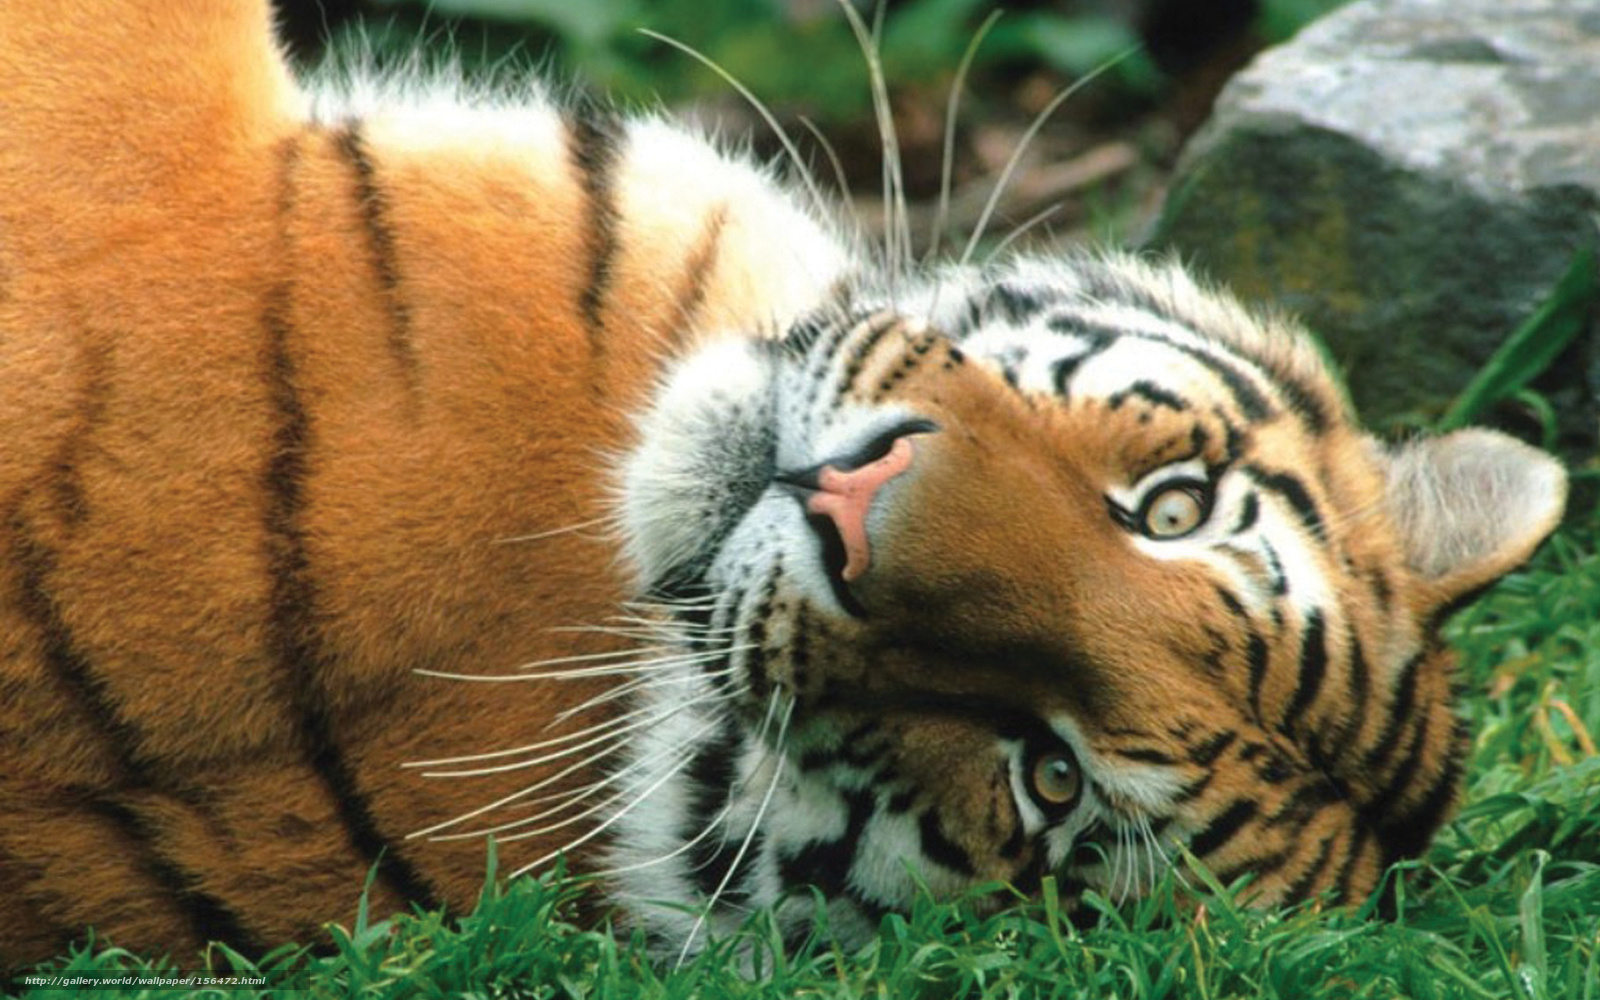 Wallpaper Tiger Big Cat Desktop In The